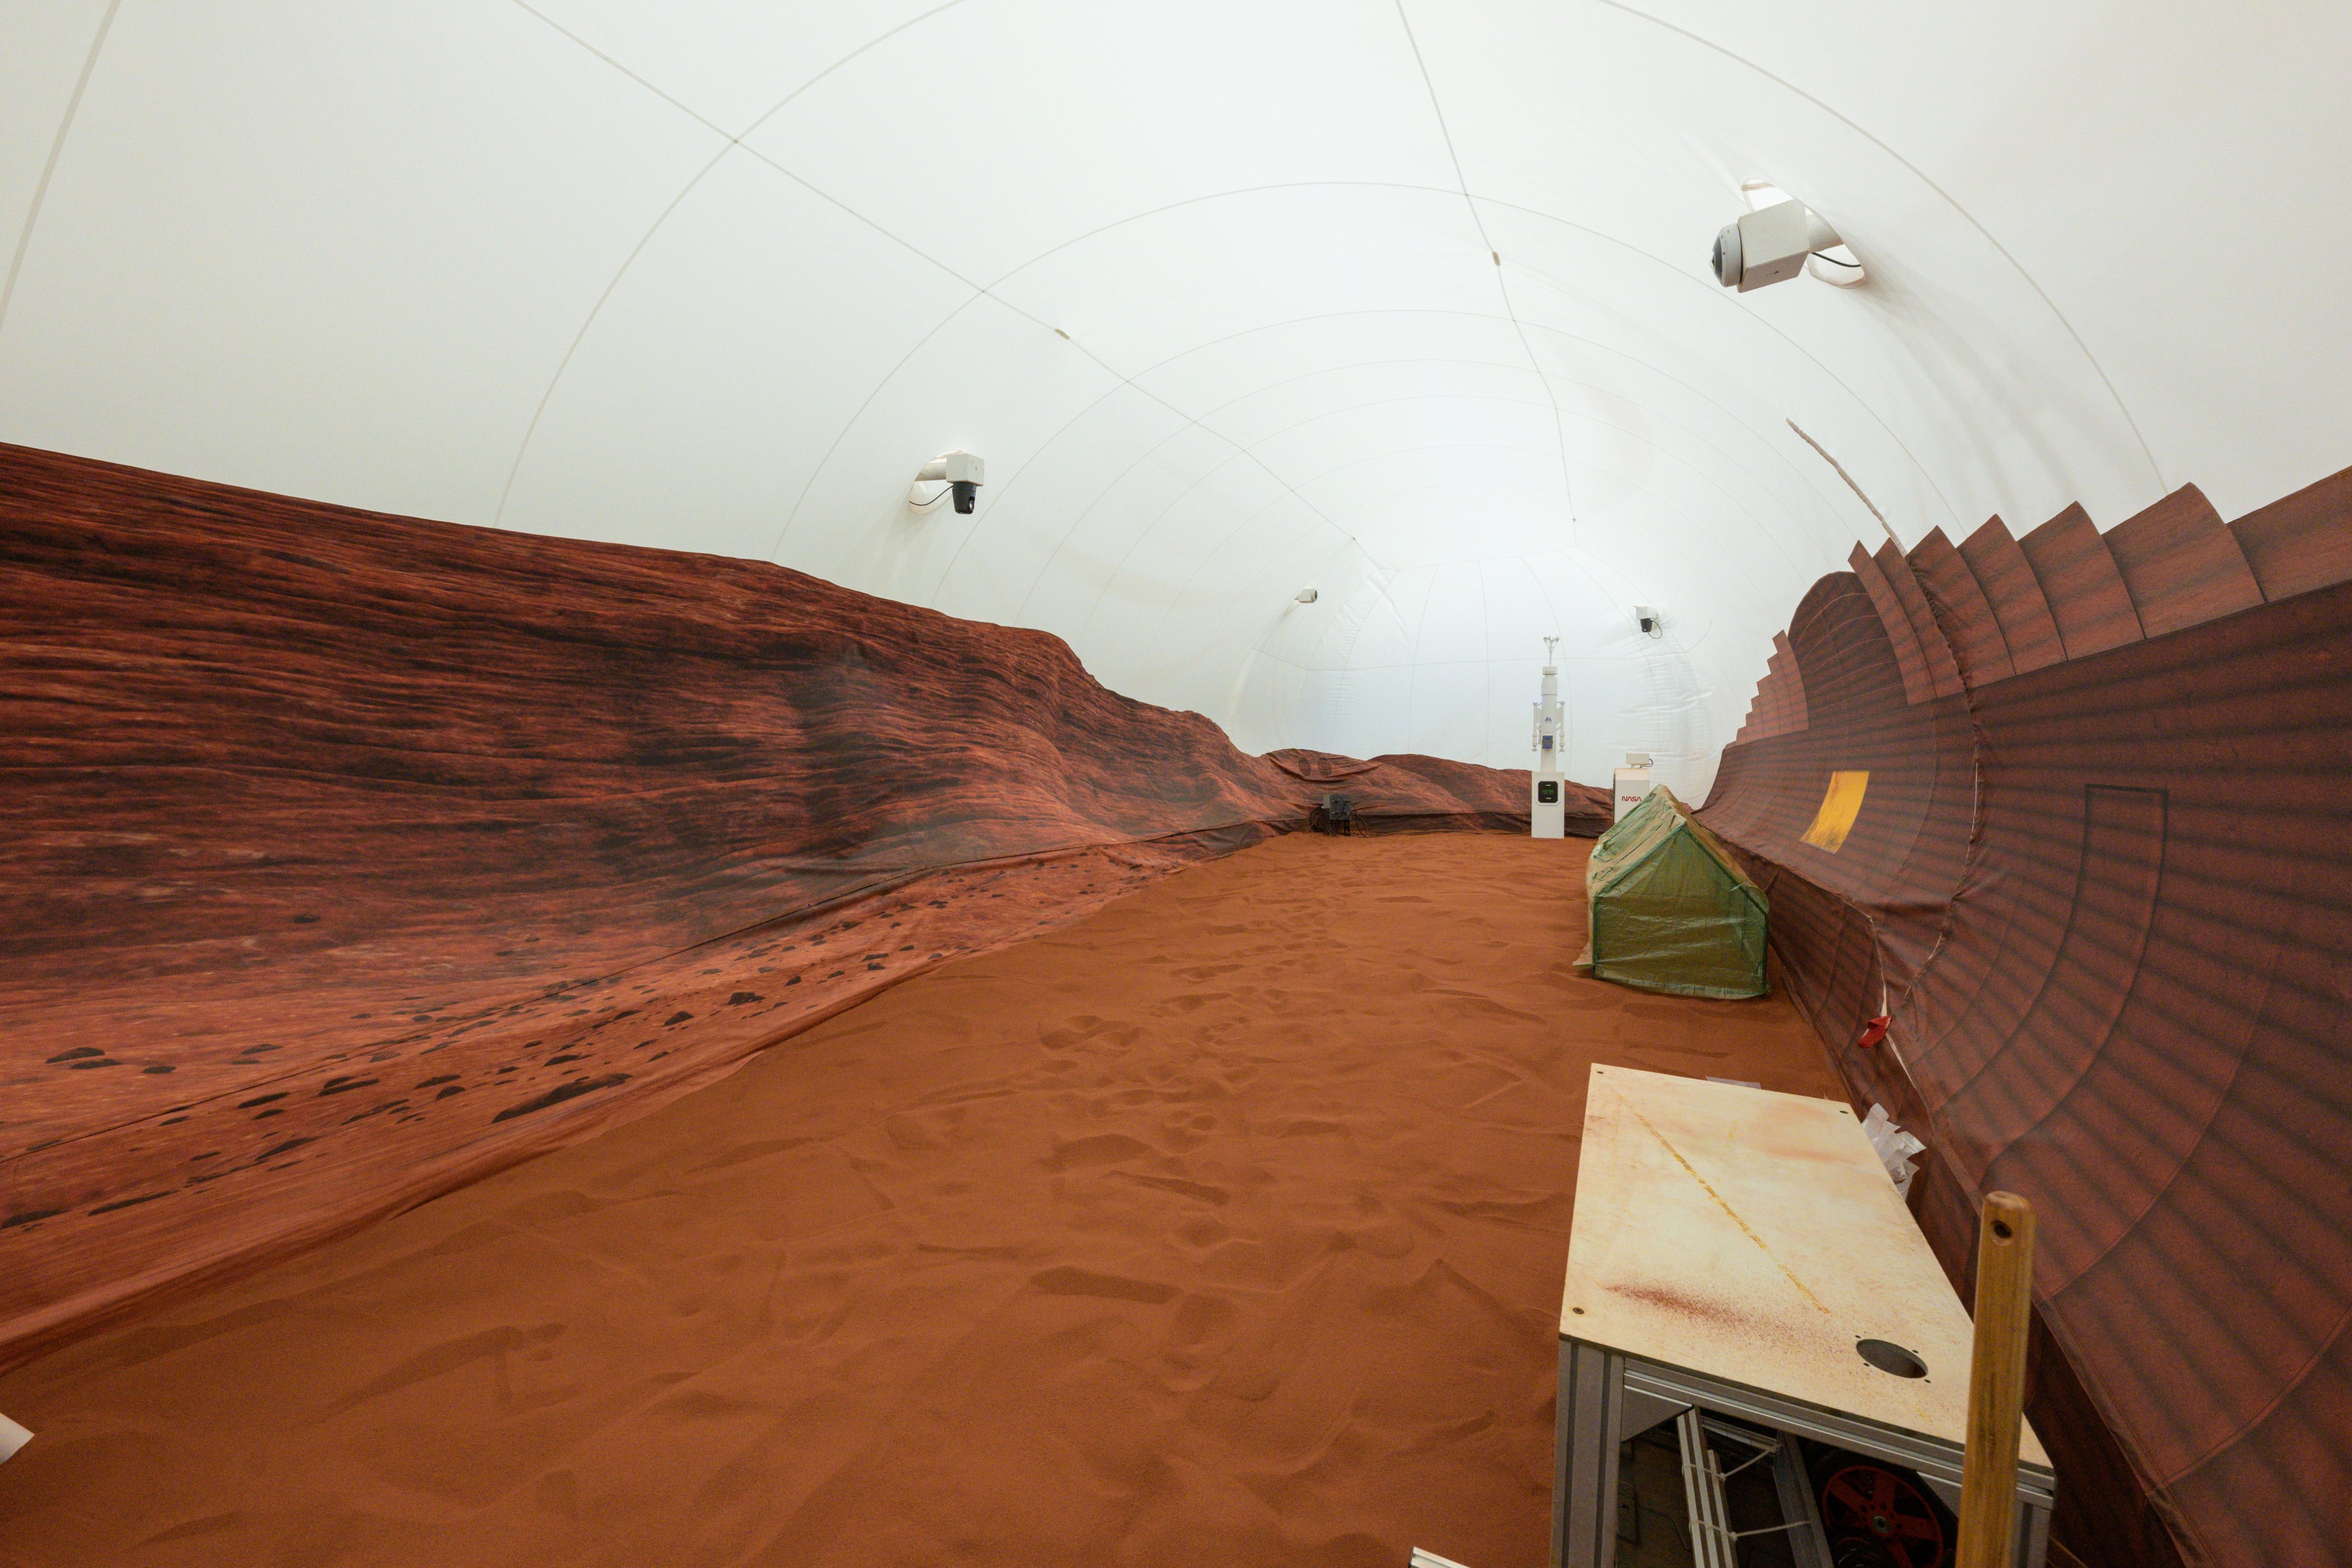 Volunteer crew to begin yearlong mission in NASA’s simulated Mars habitat this summer